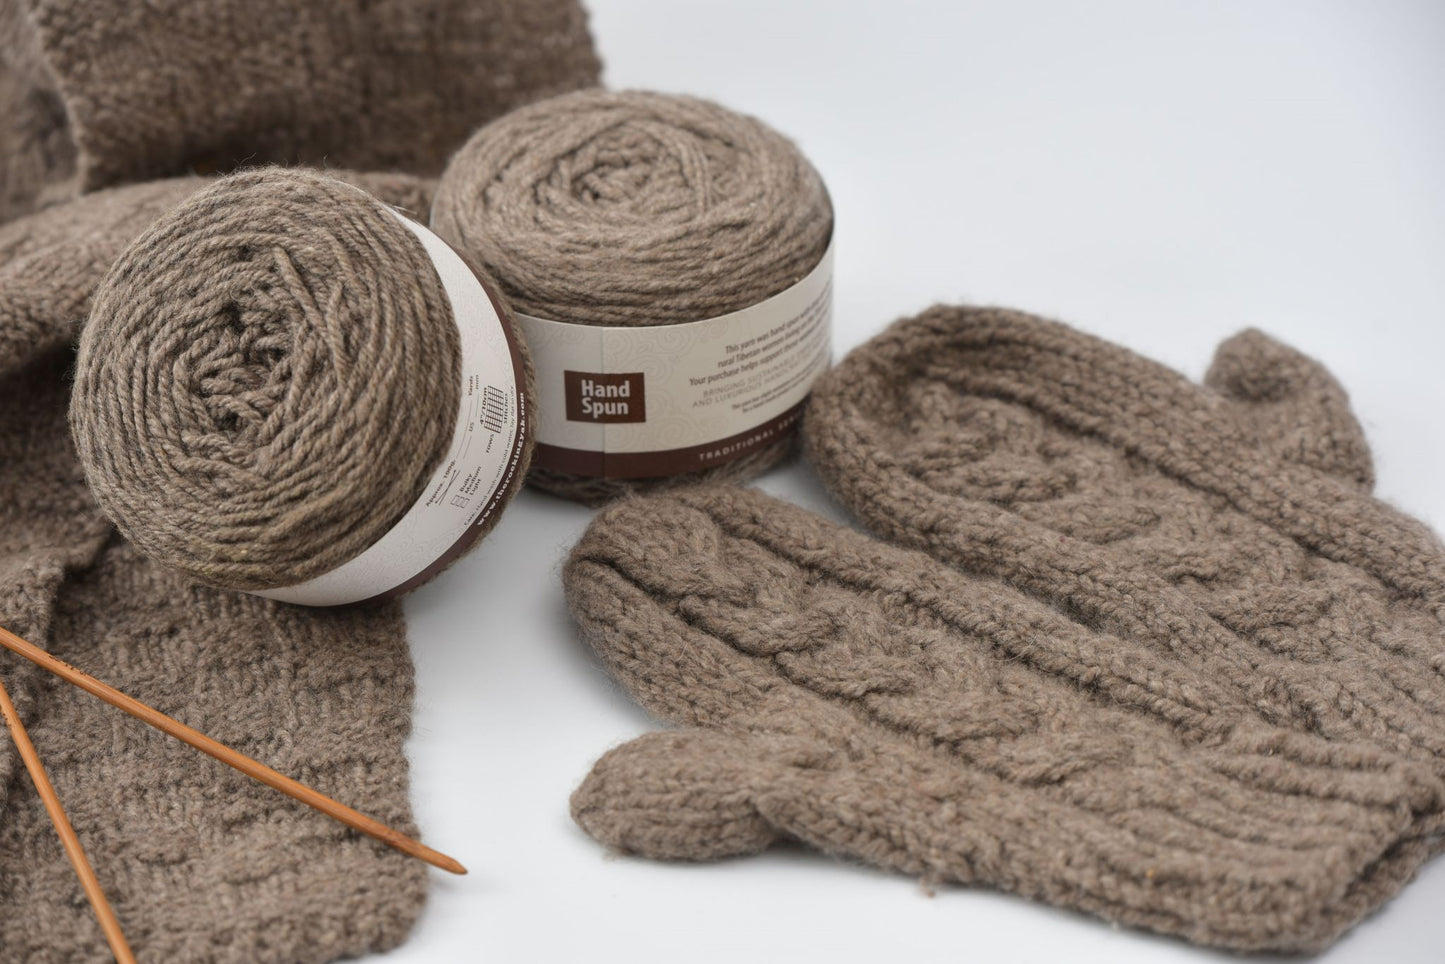 Traditional Series yarn( Hand spun)